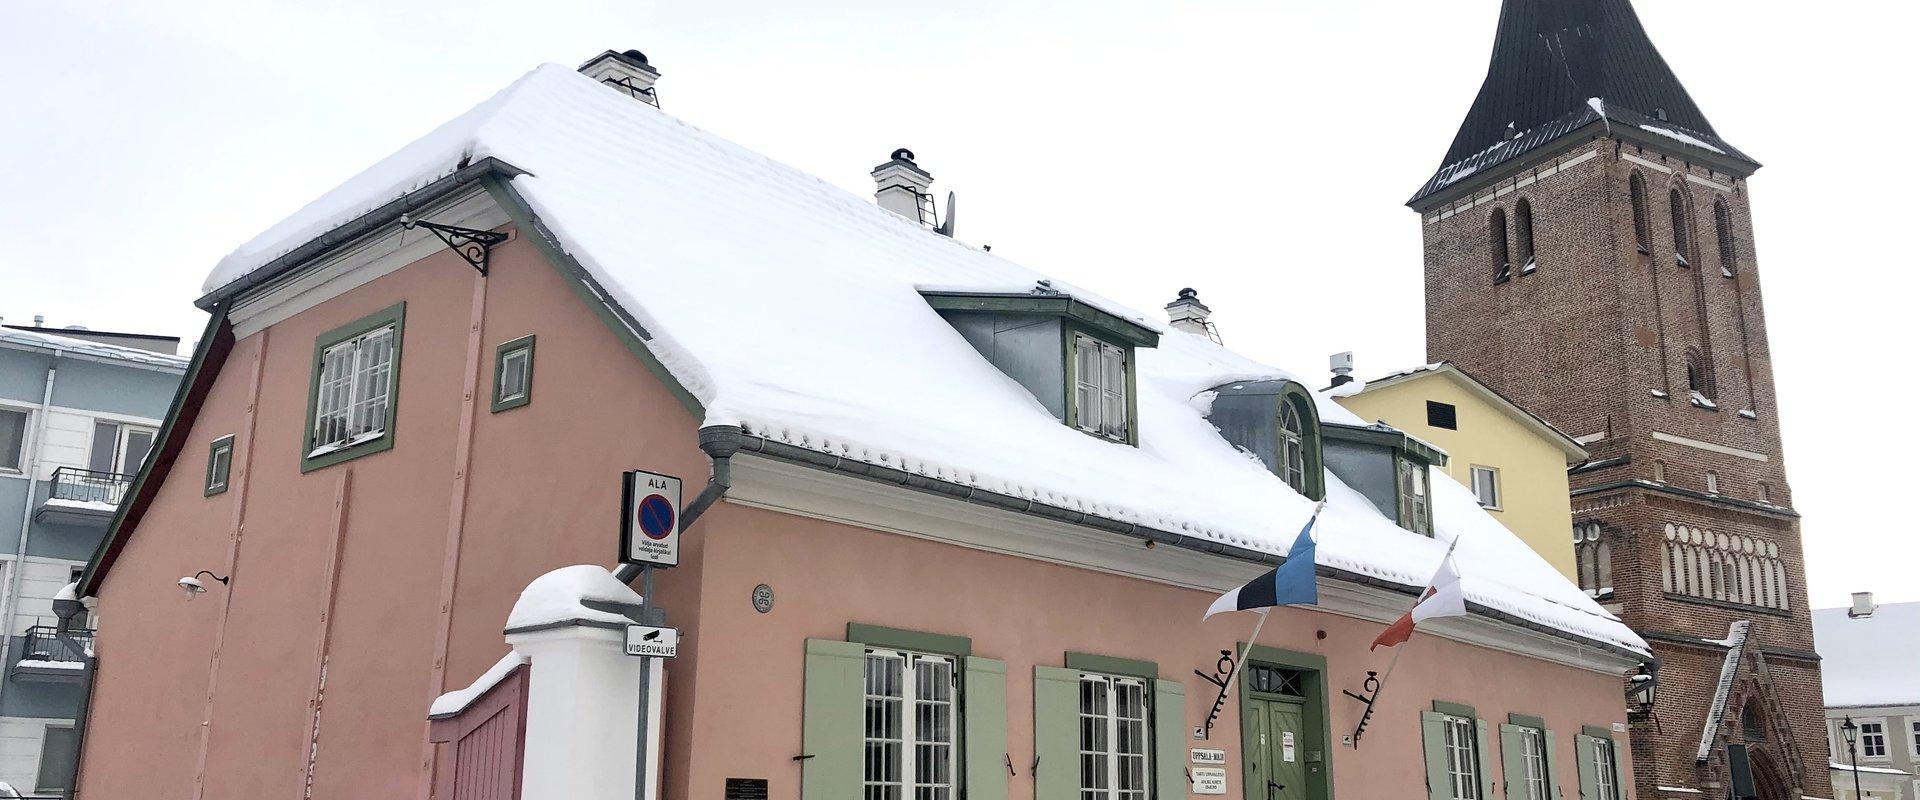 Uppsala House in Tartu